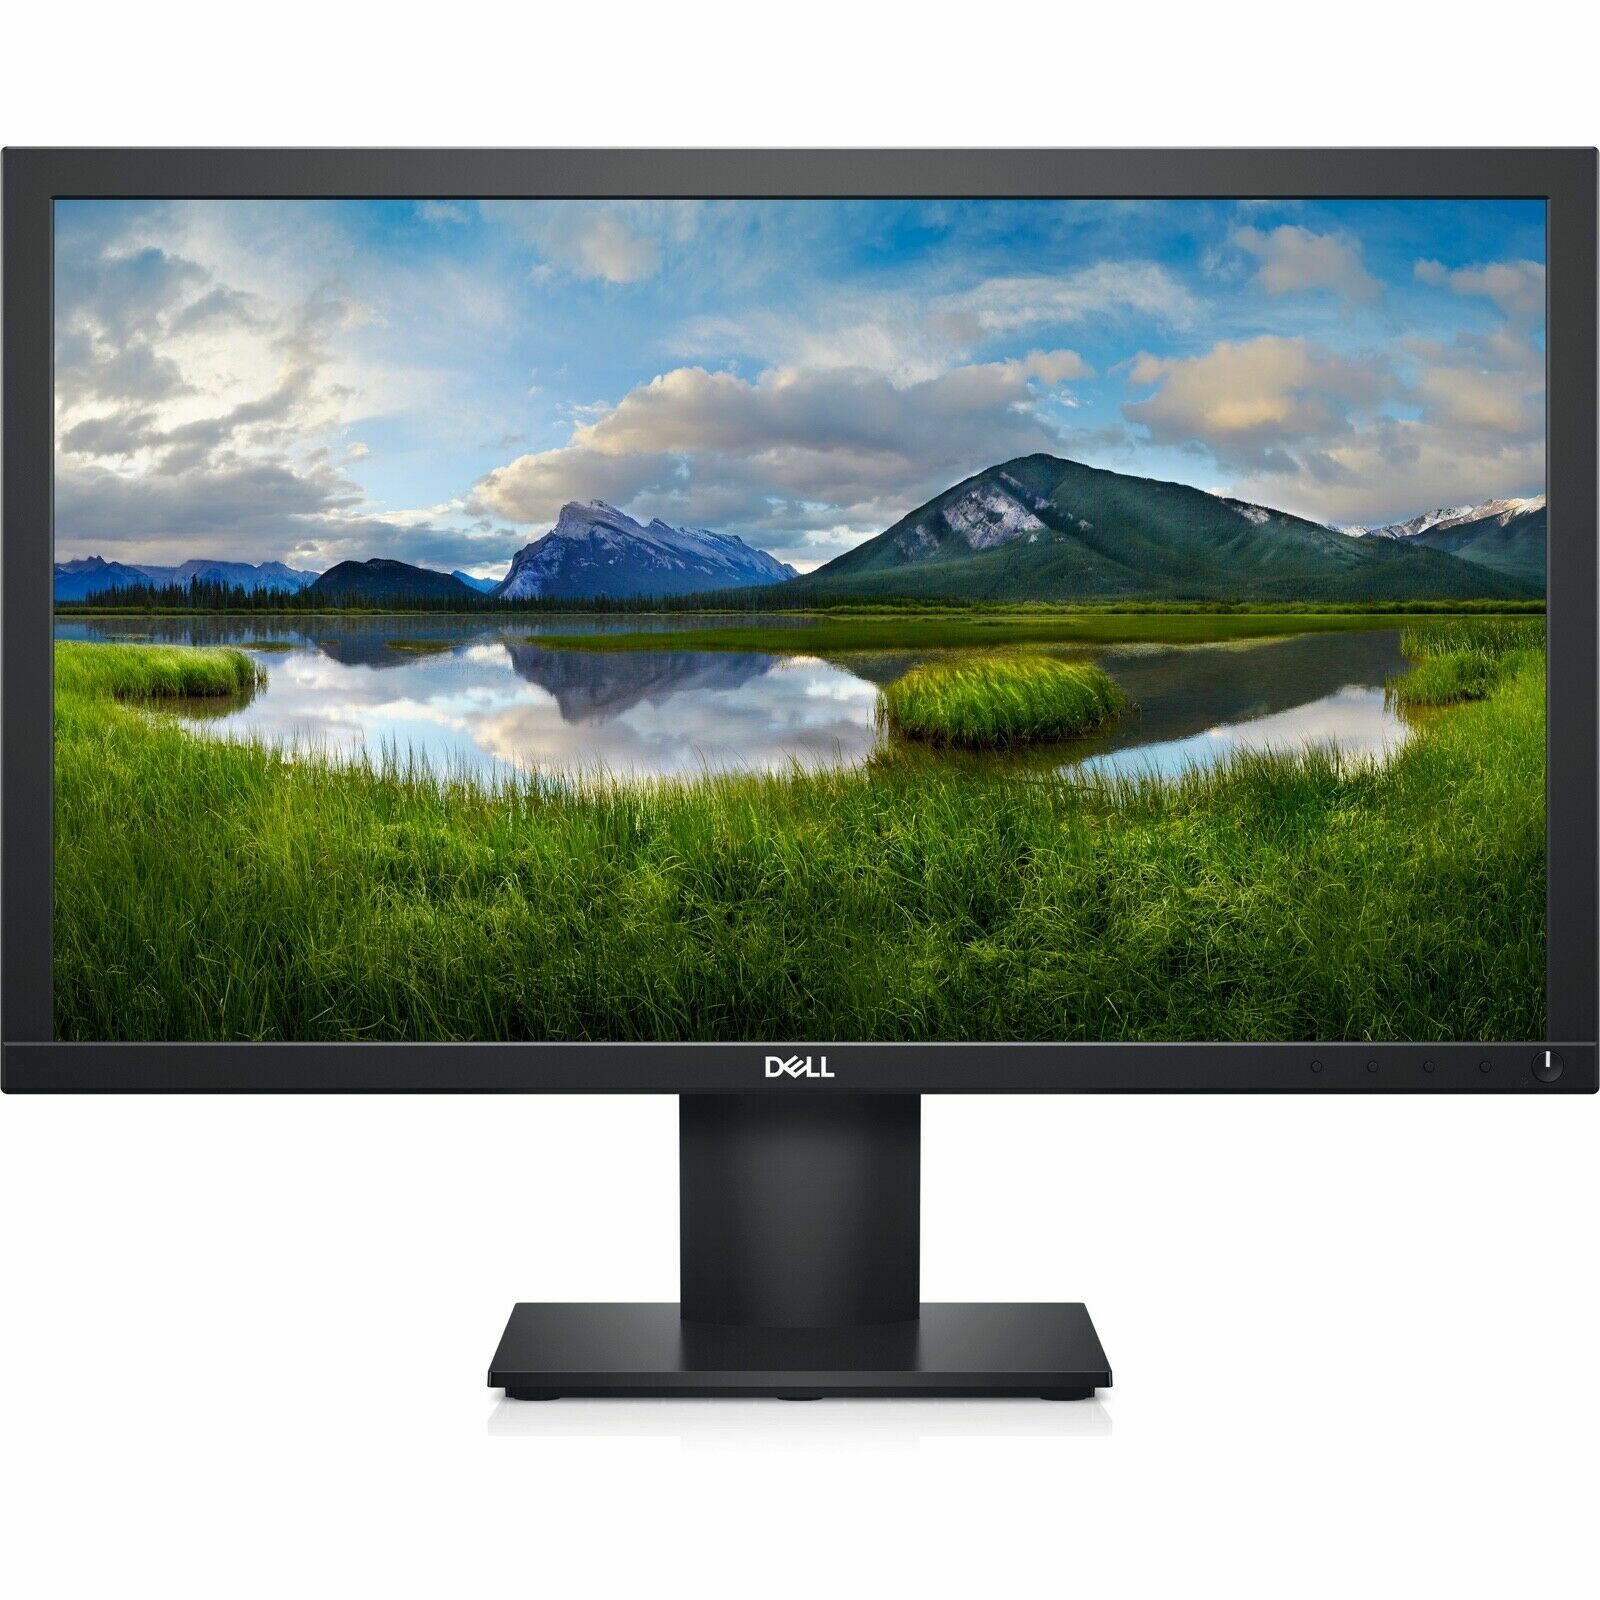 Dell UltraSharp 22 inch LCD Monitor with Power cable and VGA Grade A+ NO HDMI